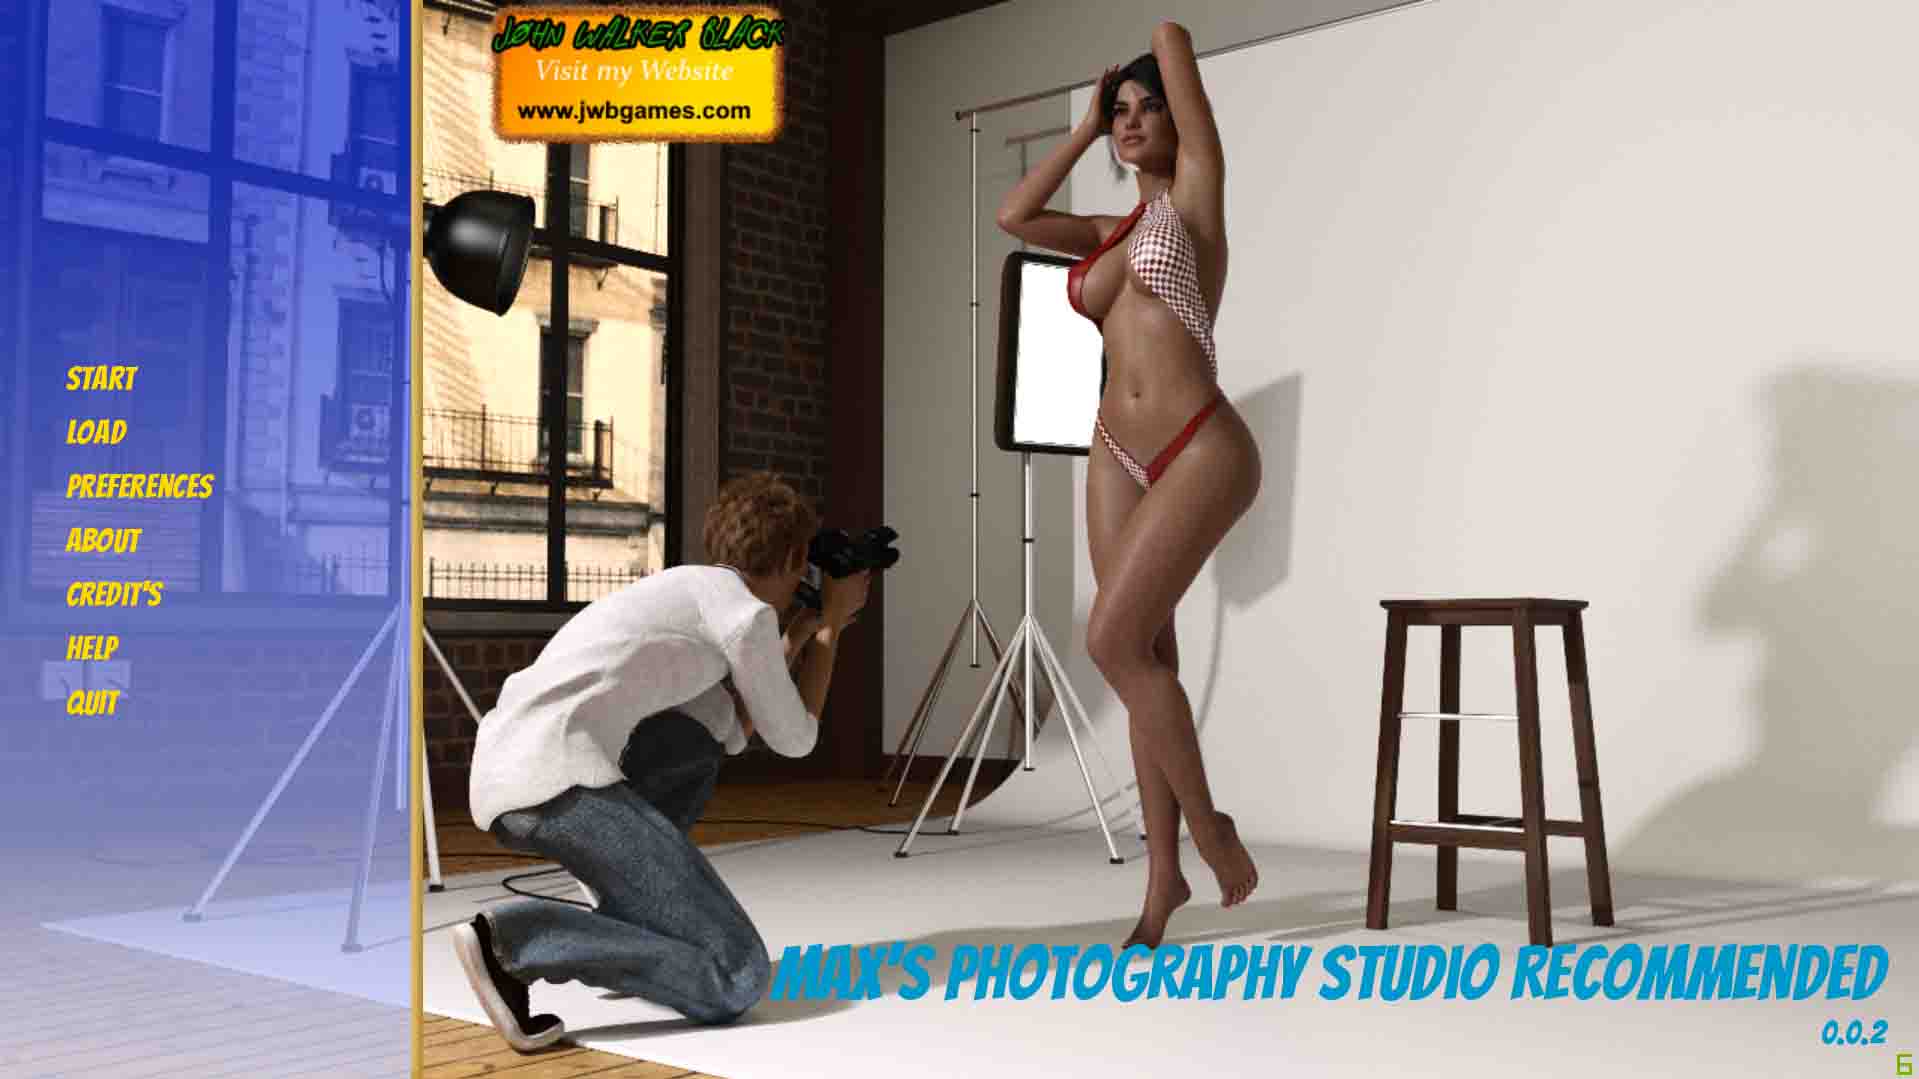 Maxs Fotografie Studio